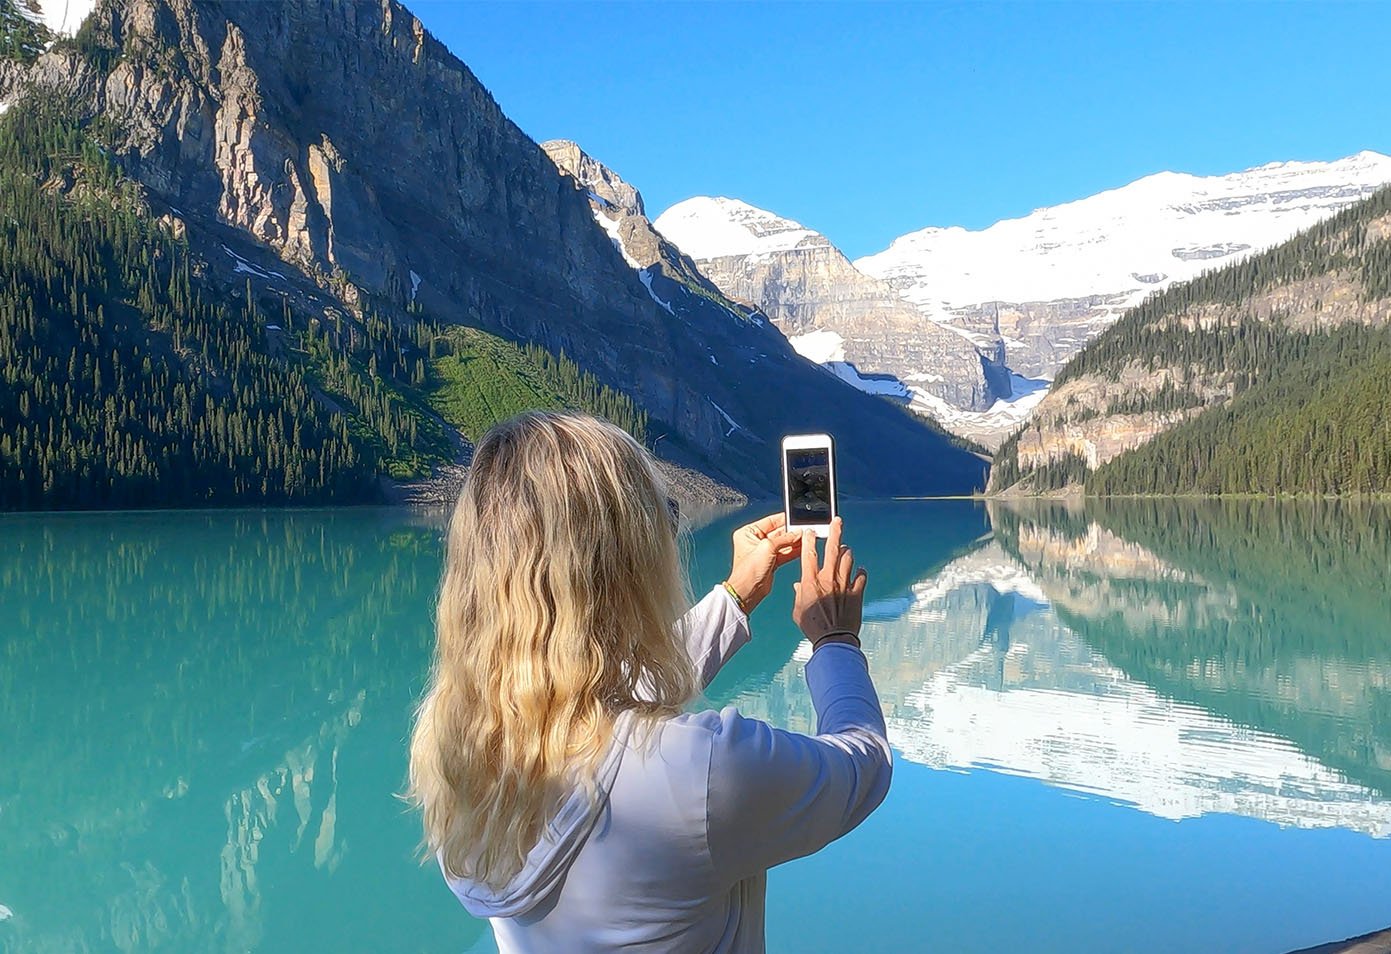 5 Most Instagrammable Spots in Lake Louise